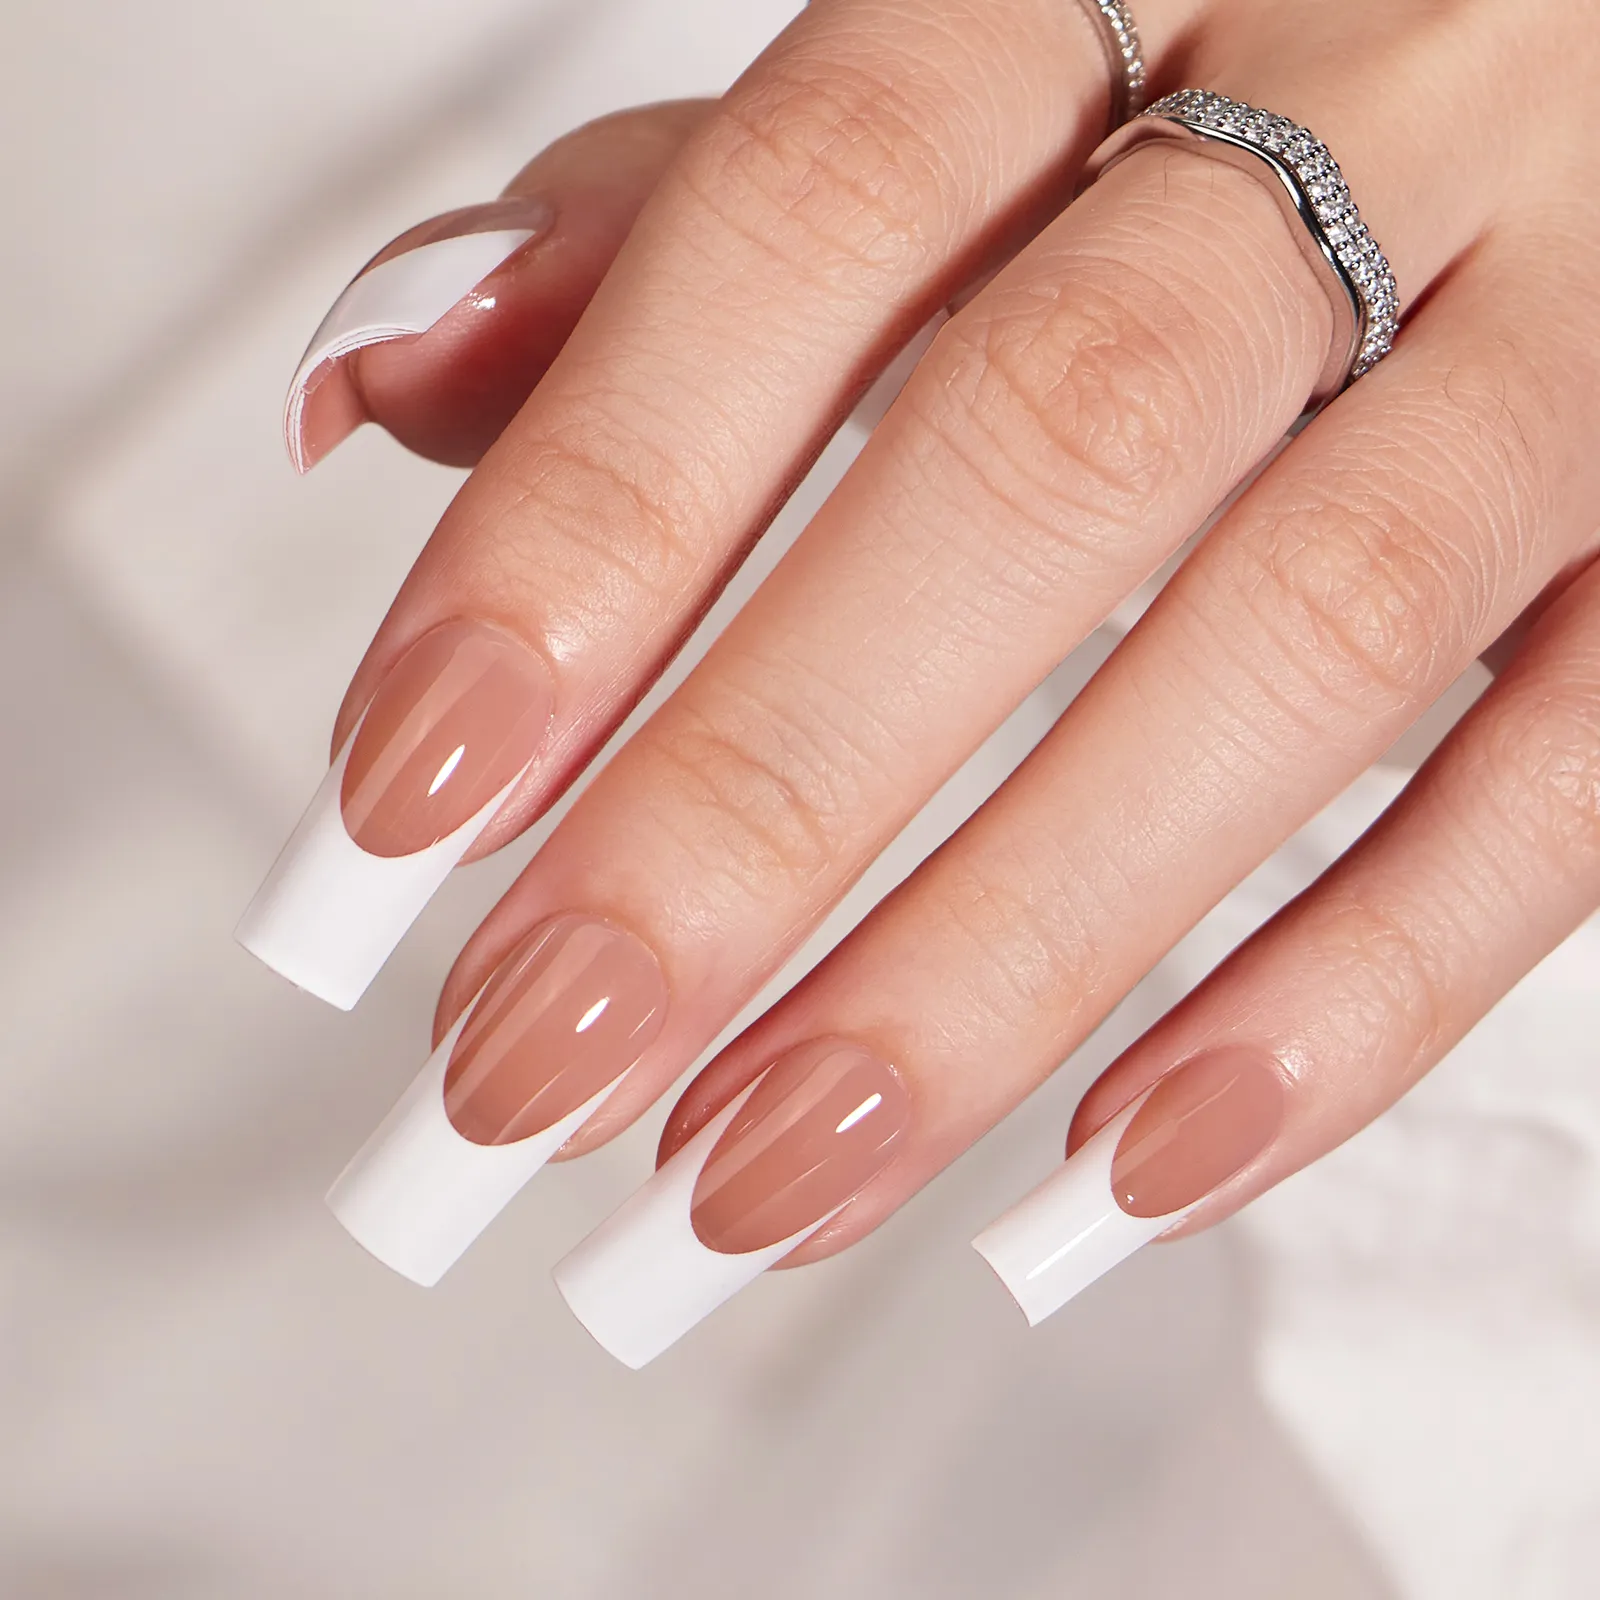 Btartbox stampa personalizzata sulle unghie vendita all'ingrosso unghie finte artificiali unghie francesi gel morbidi di alta qualità stampa di punta francese sulle unghie